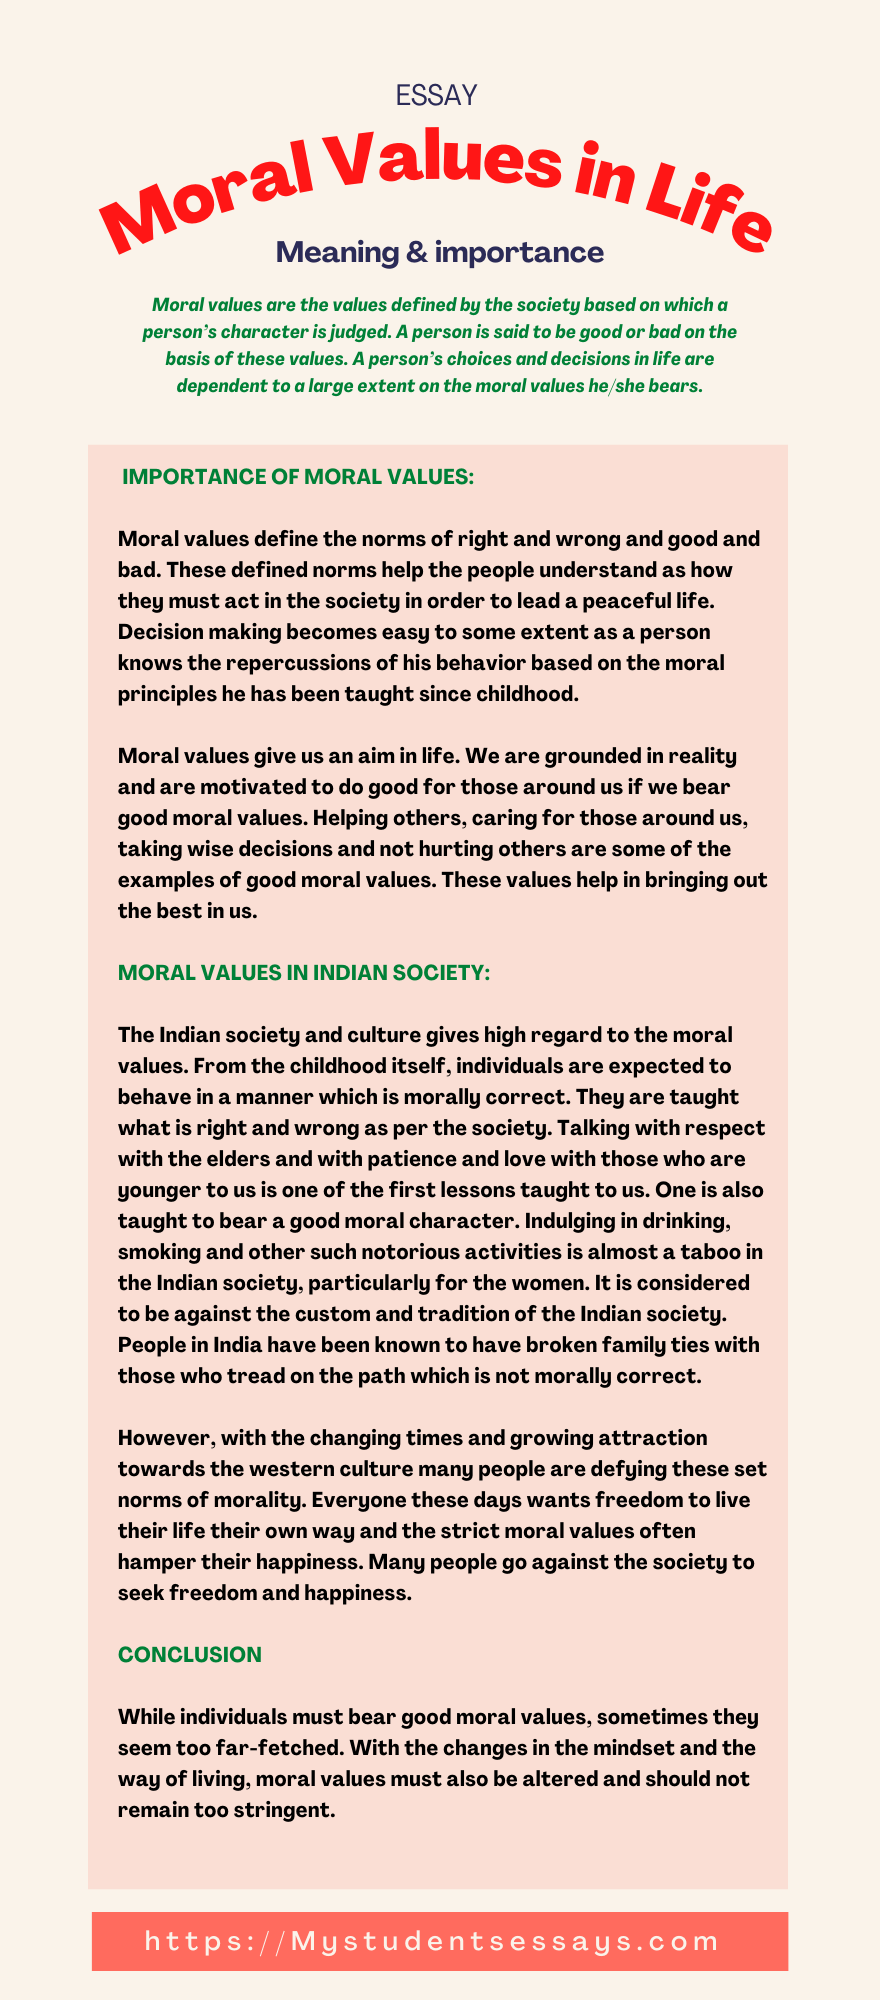 Essay on Moral Values